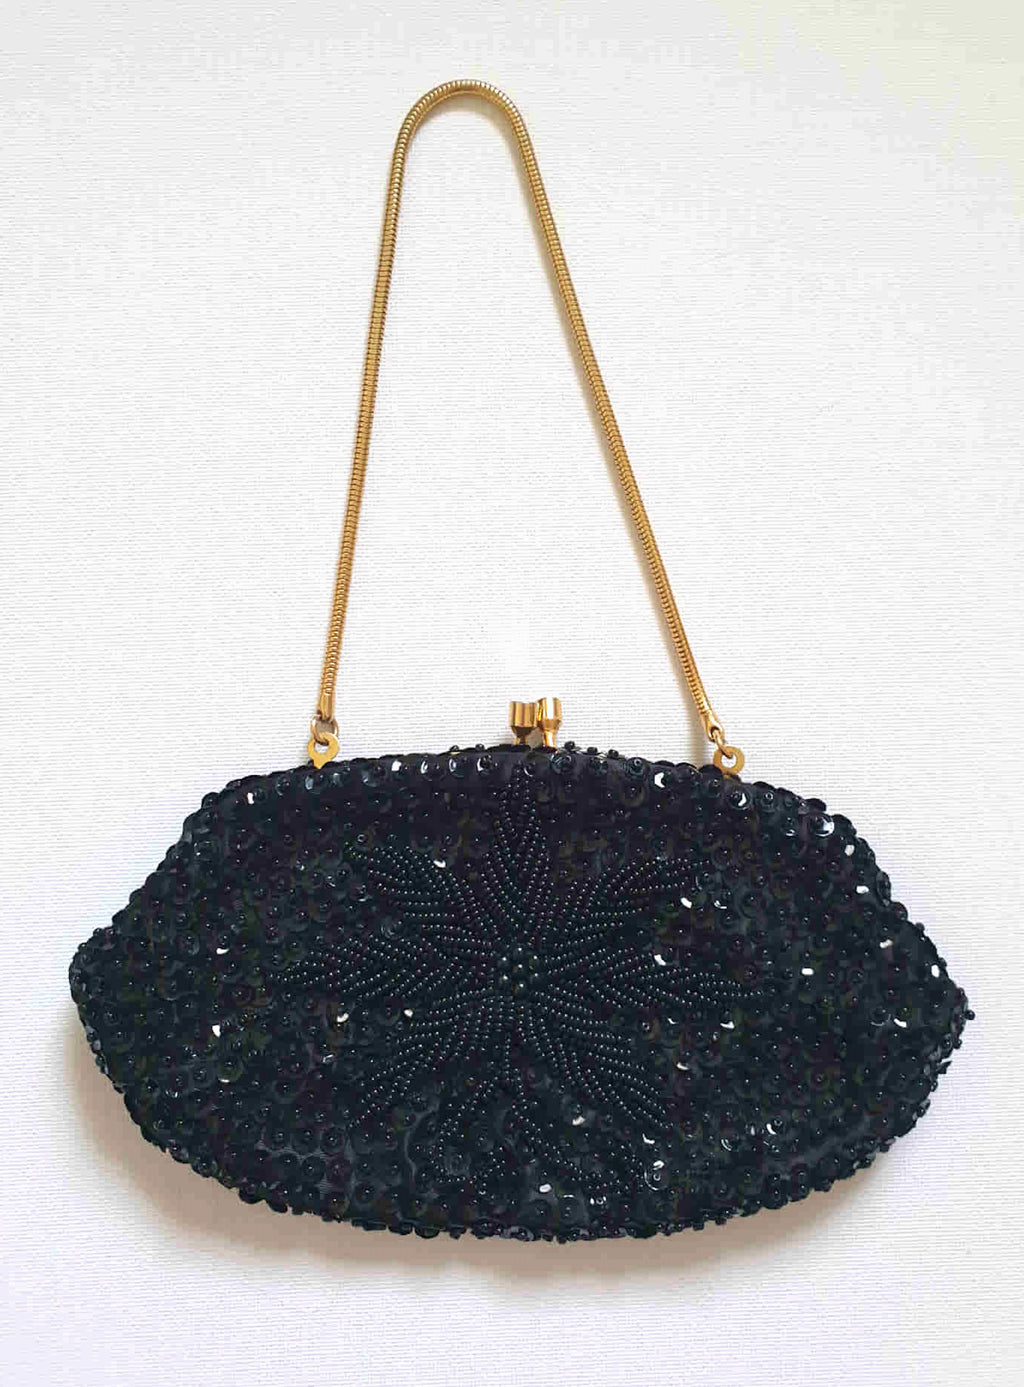 1960s vintage black beaded evening purse